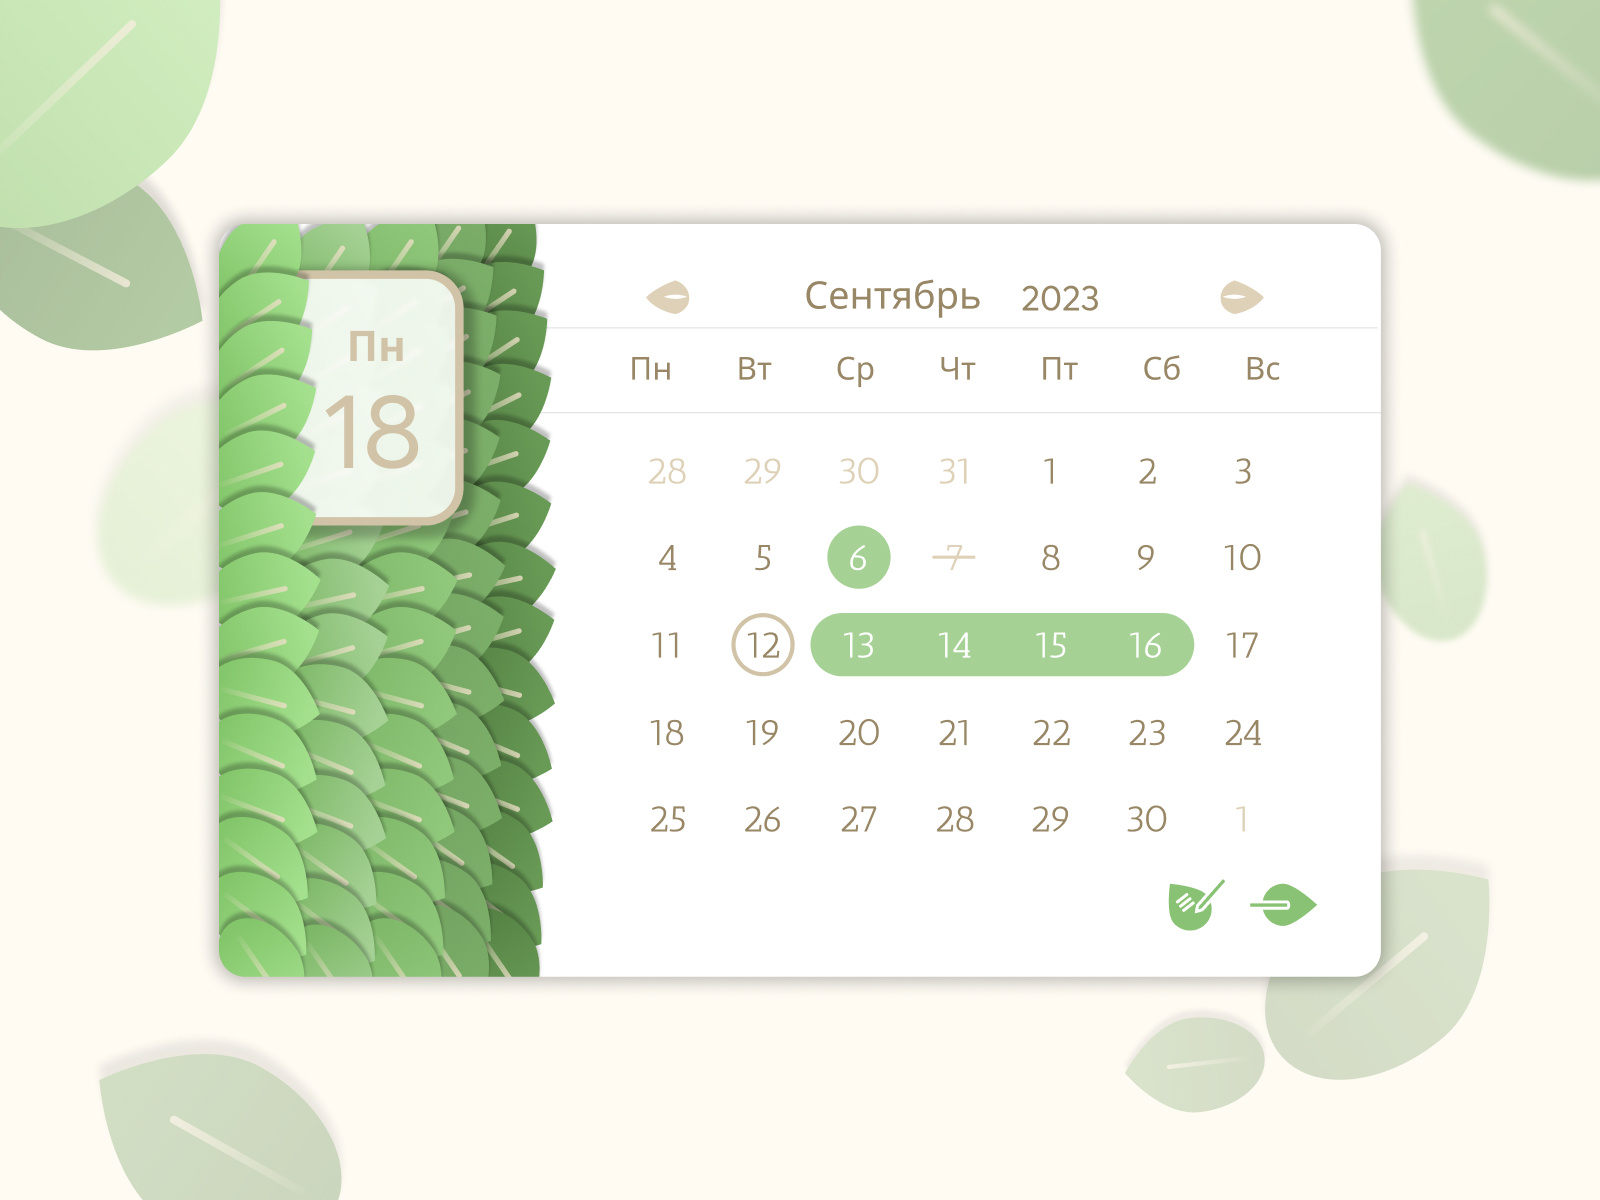 Concept of a plant calendar by Daria Sokolova on Dribbble